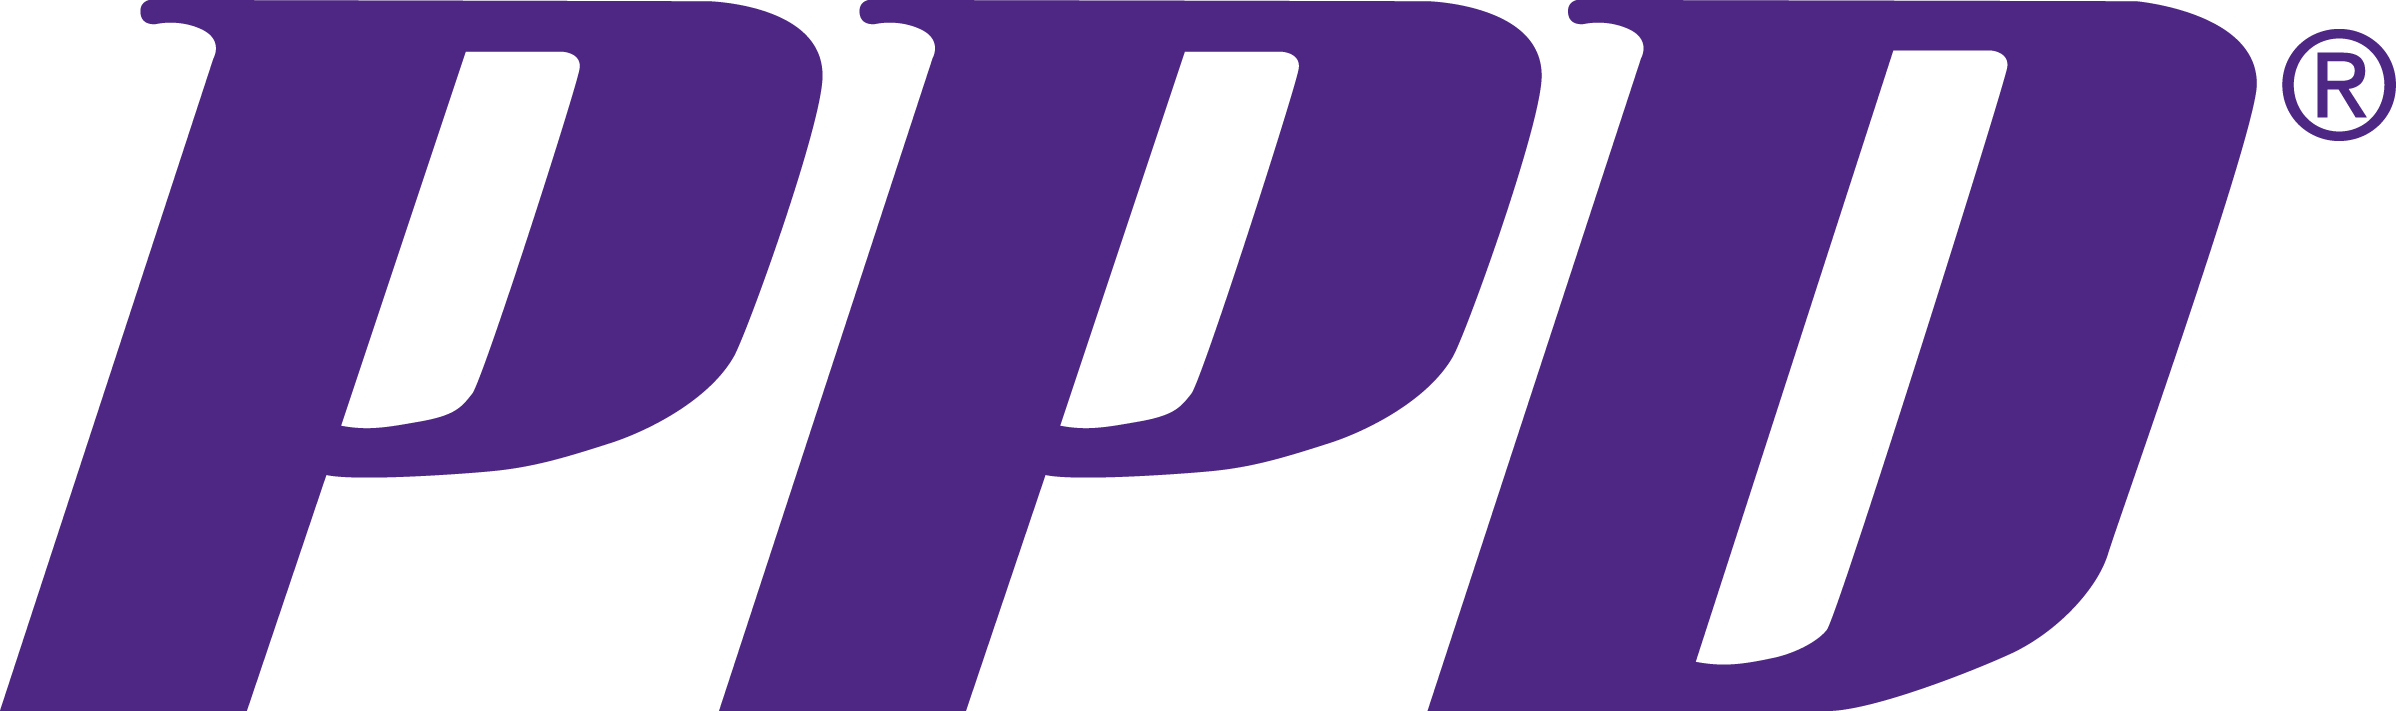 PPD Logo - PPD Logo PMS 268 Aerosol Society